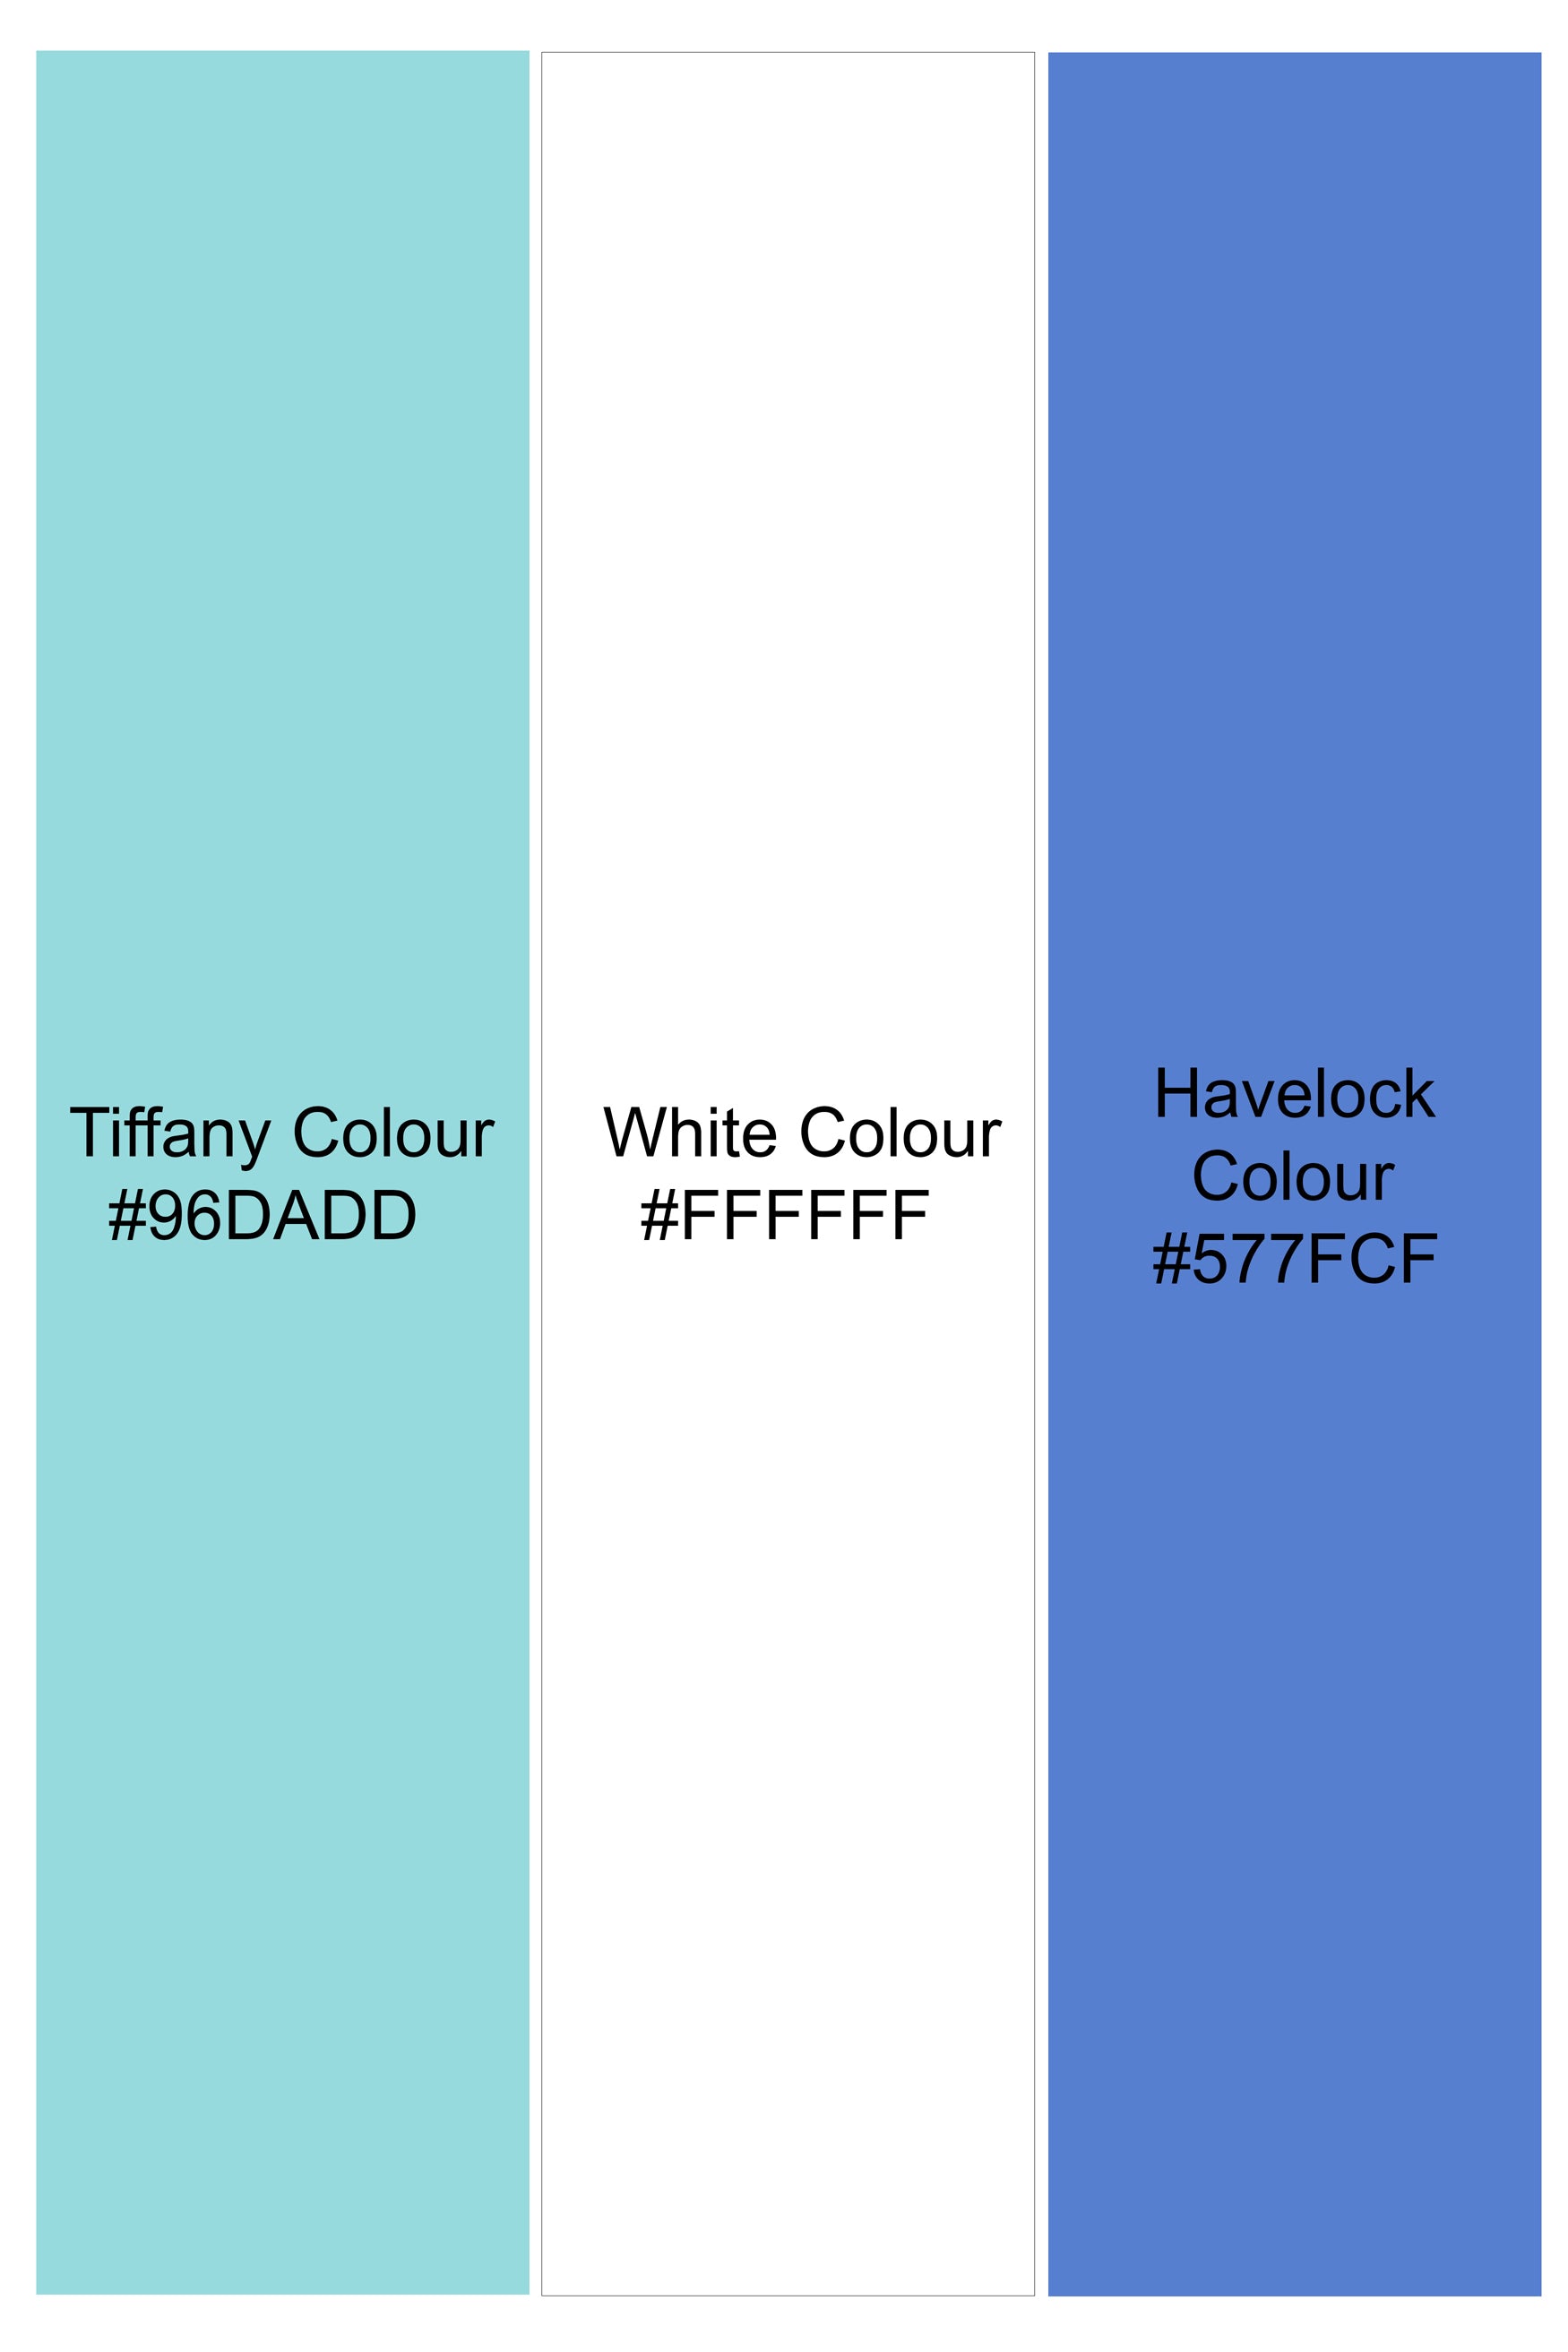 Tiffany Blue and White Striped Dobby textured Premium Giza Cotton Kurta Shirt 11950-KS-38, 11950-KS-H-38, 11950-KS-39, 11950-KS-H-39, 11950-KS-40, 11950-KS-H-40, 11950-KS-42, 11950-KS-H-42, 11950-KS-44, 11950-KS-H-44, 11950-KS-46, 11950-KS-H-46, 11950-KS-48, 11950-KS-H-48, 11950-KS-50, 11950-KS-H-50, 11950-KS-52, 11950-KS-H-52